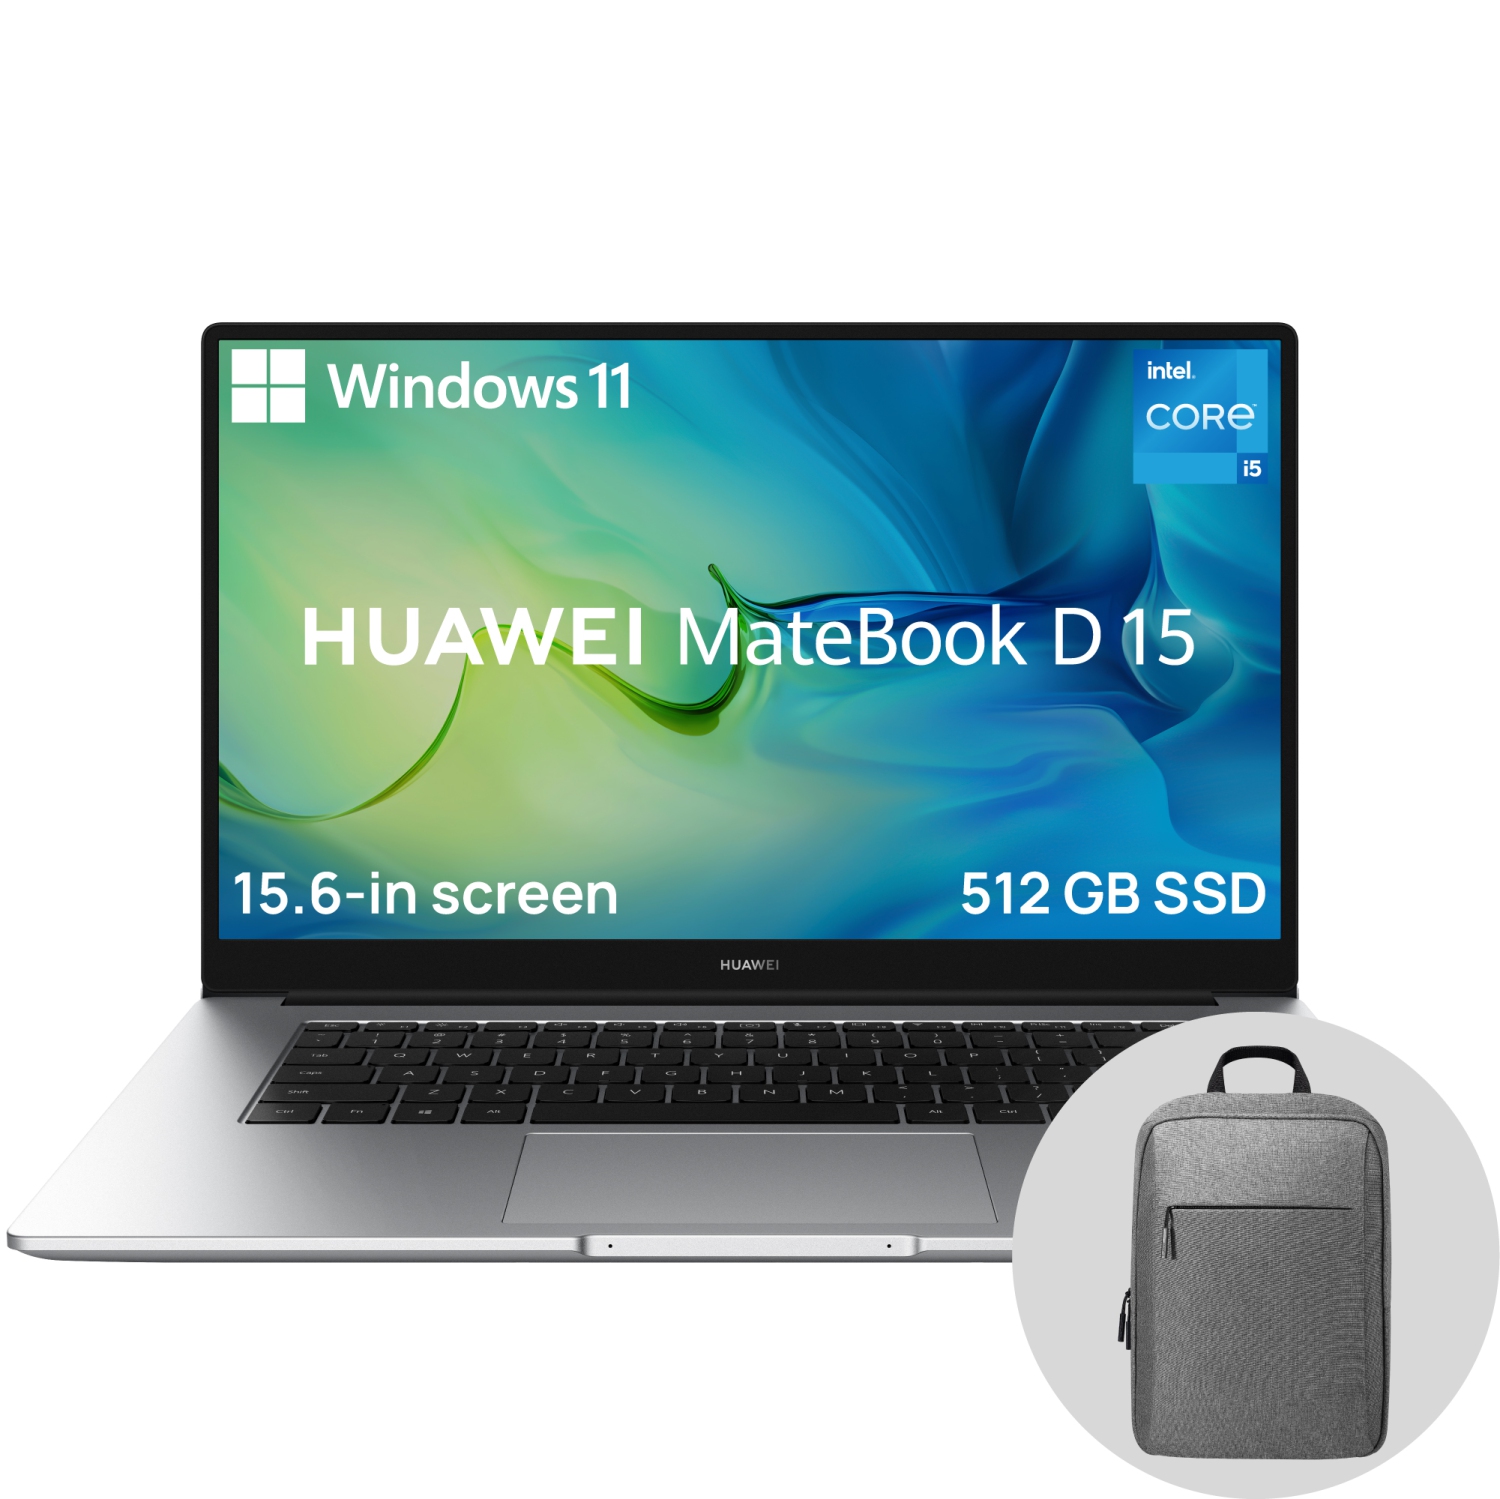 HUAWEI MateBook D 15 - 15.6'' 1080P Eye Comfort FullView Display, Intel Core 11th Gen i5-1135G7 CPU, Fingerprint Power Button, Pop-up Web Camera, Wi-Fi 6, 8GB RAM, 512GB SSD, Windows 11 Home